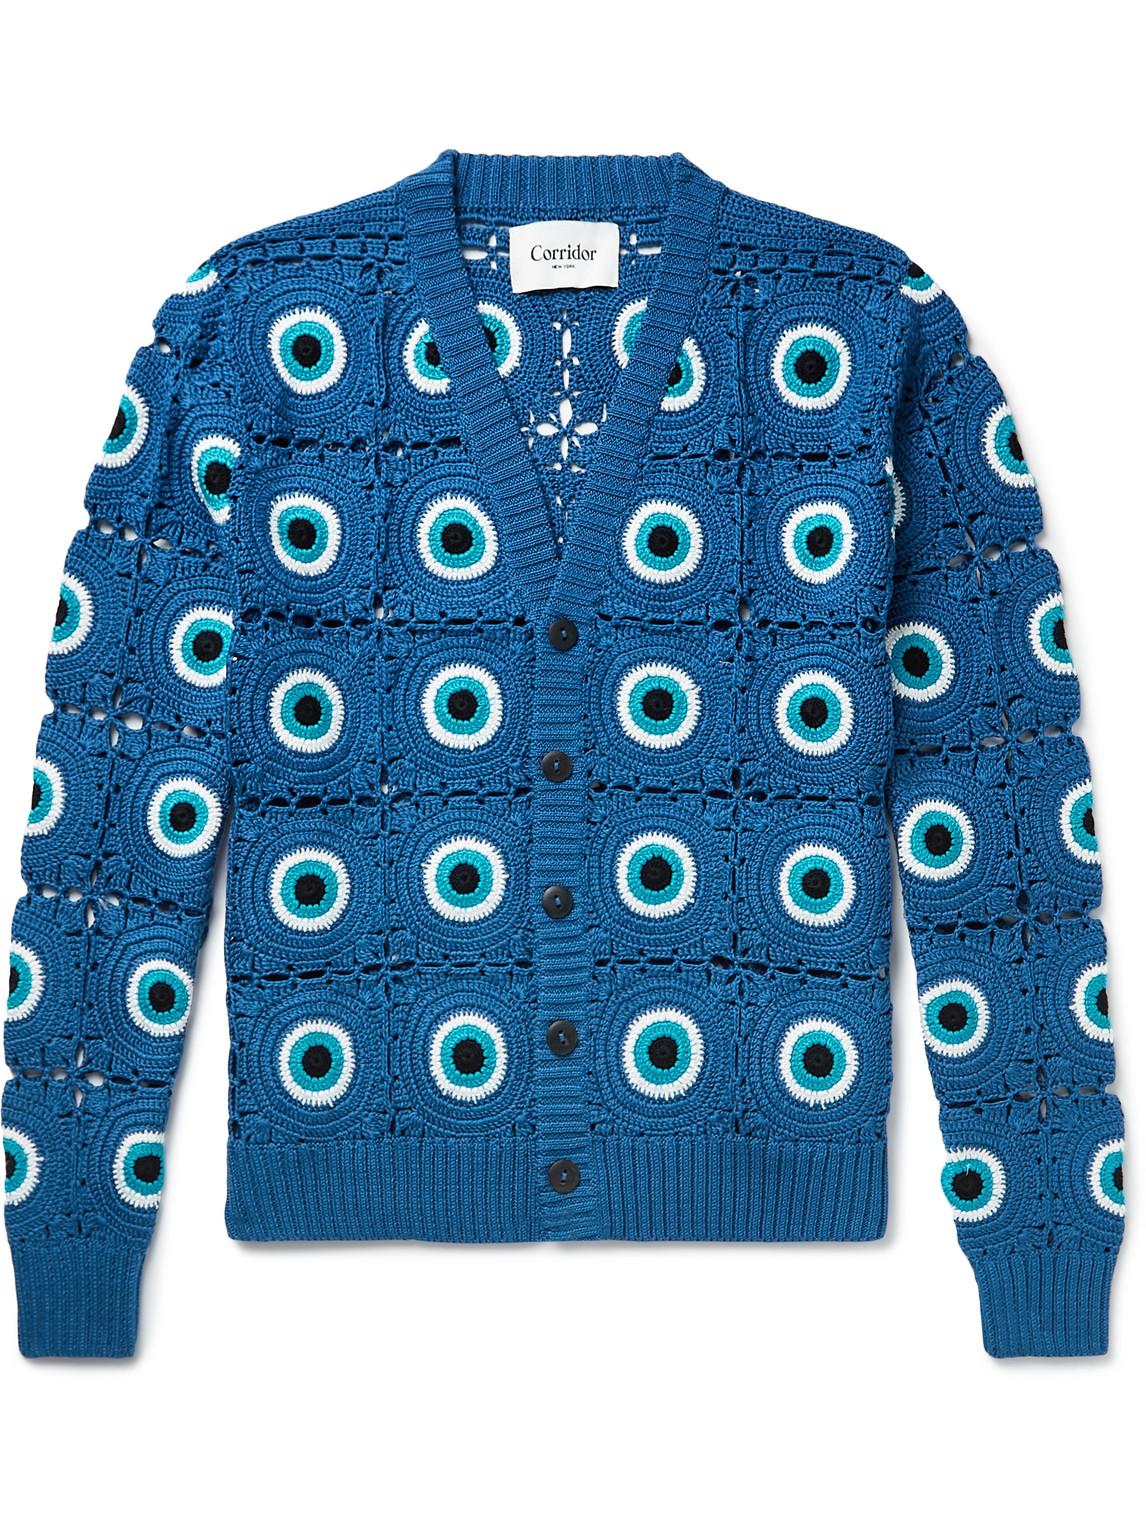 Corridor NYC Evil Eye Crocheted Pima Cotton Cardigan in Blue for Men | Lyst